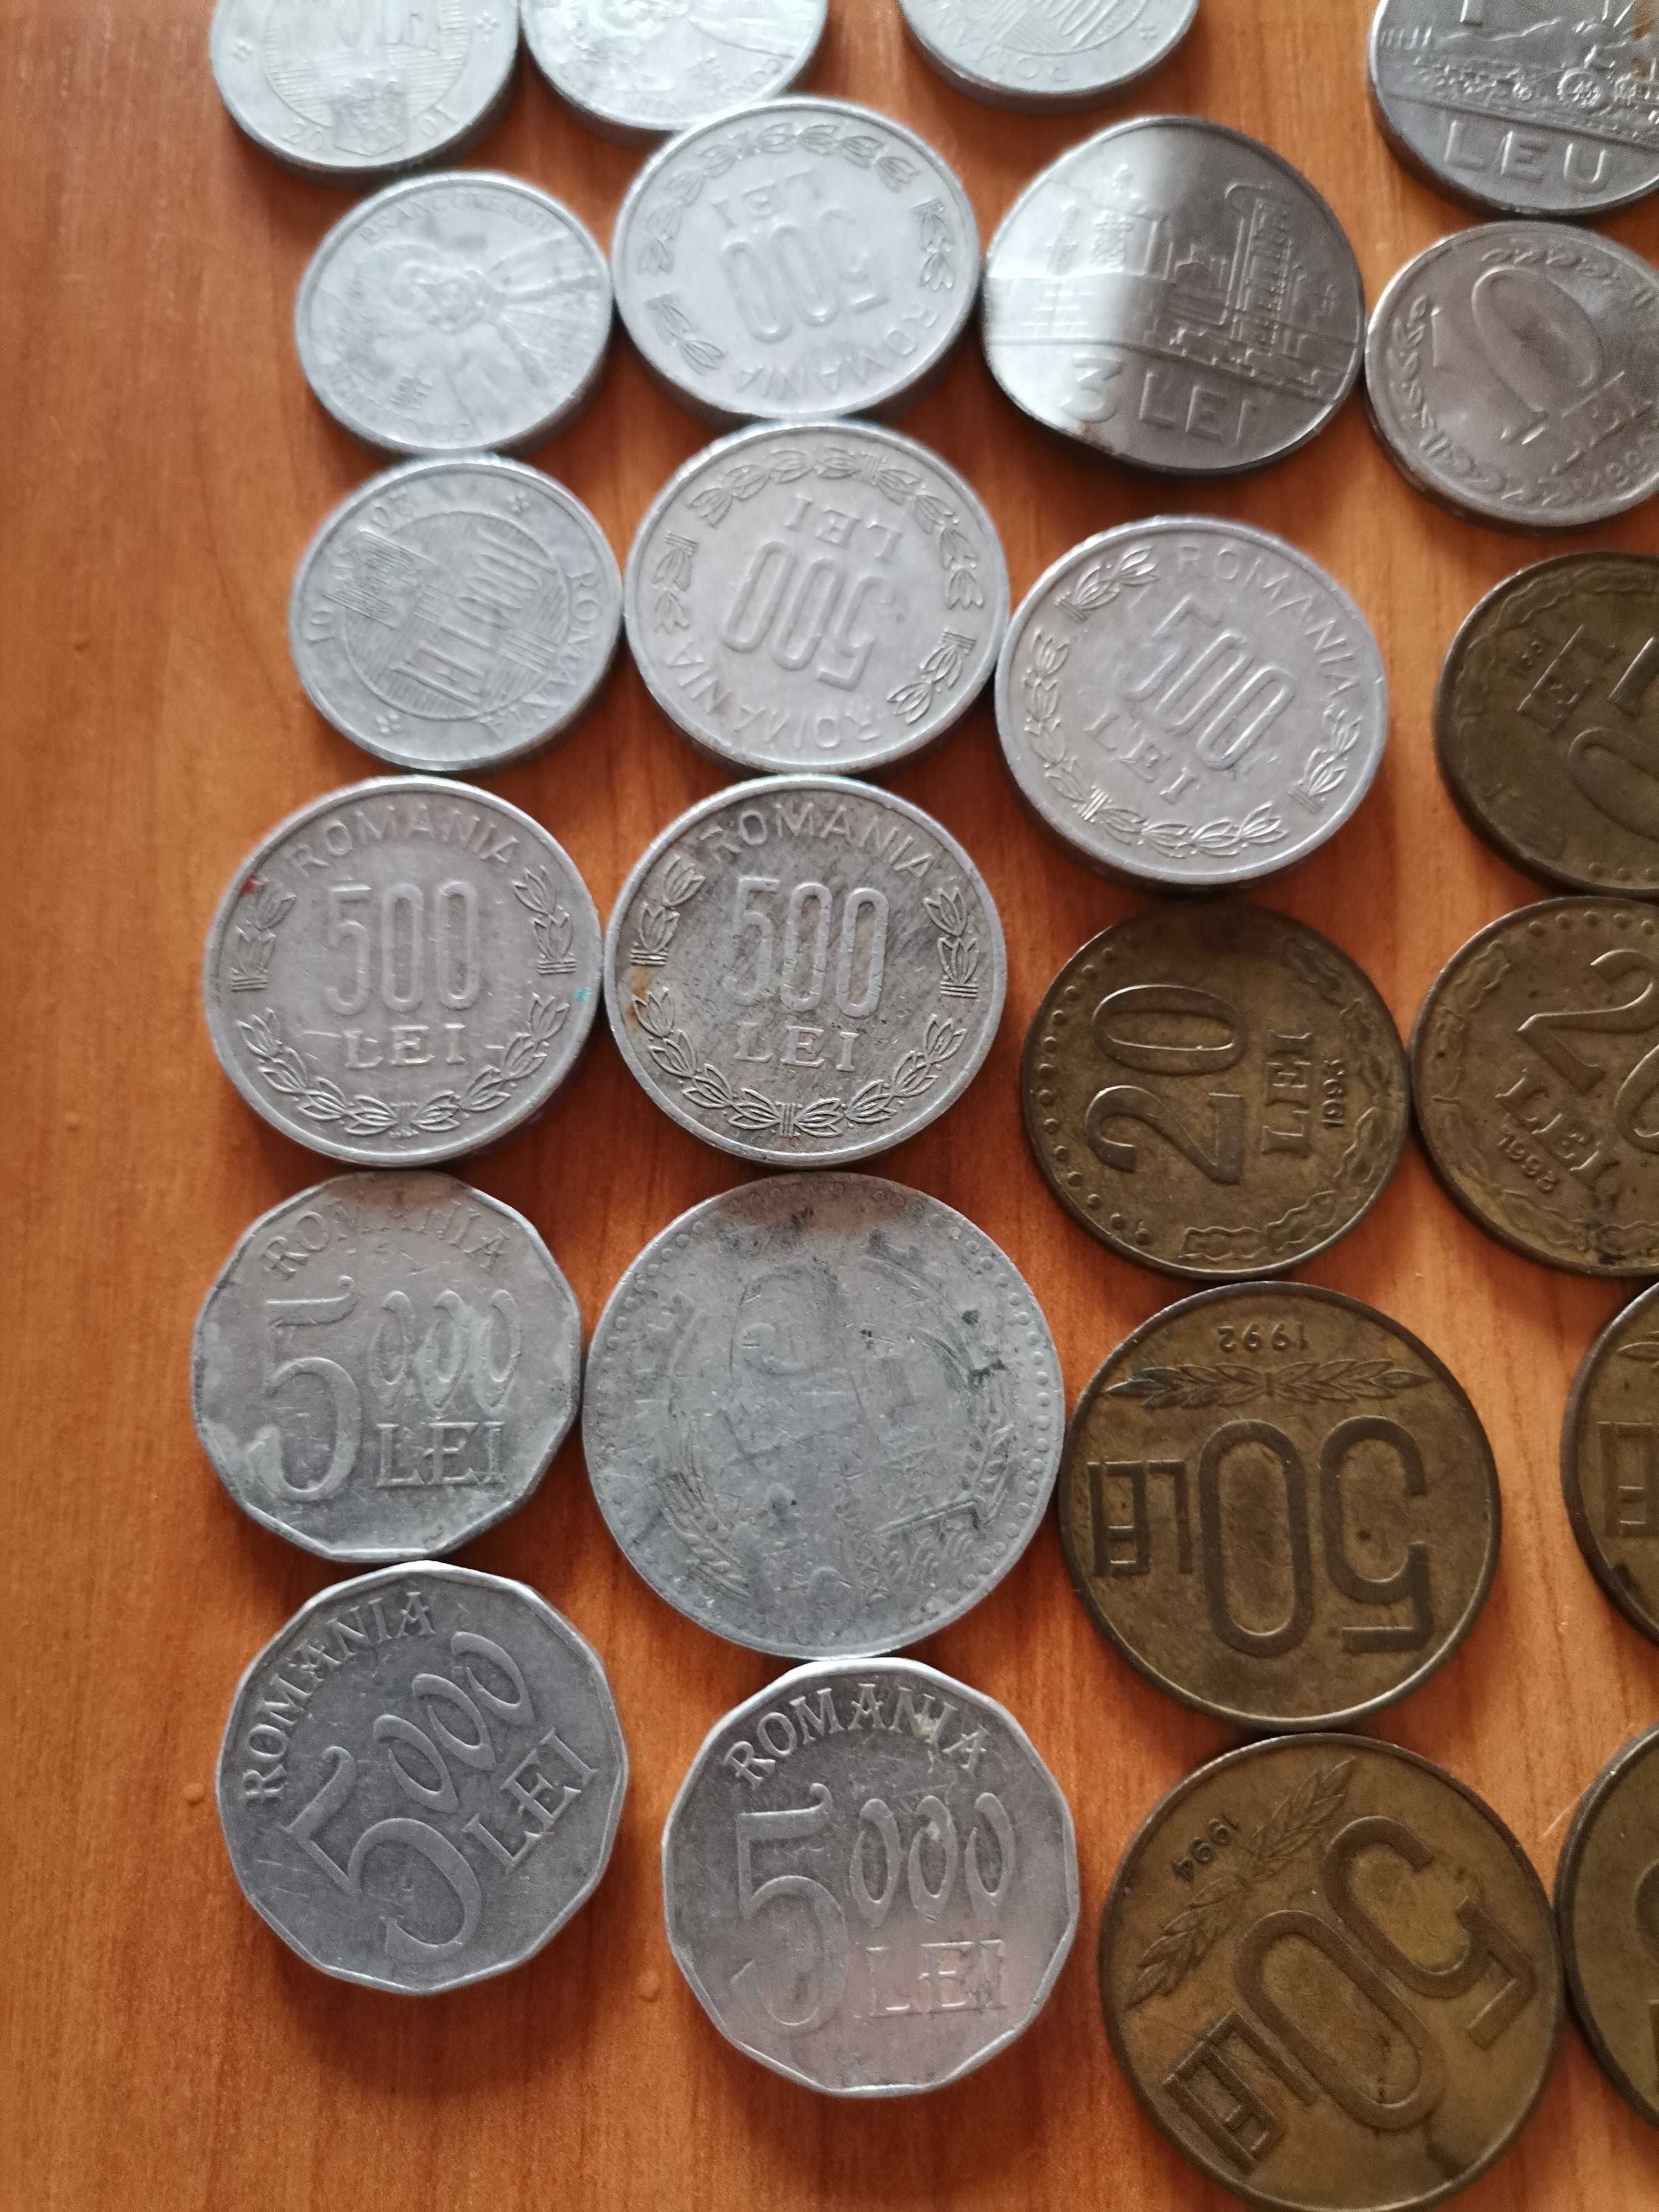 Bani vechi românești. Monede